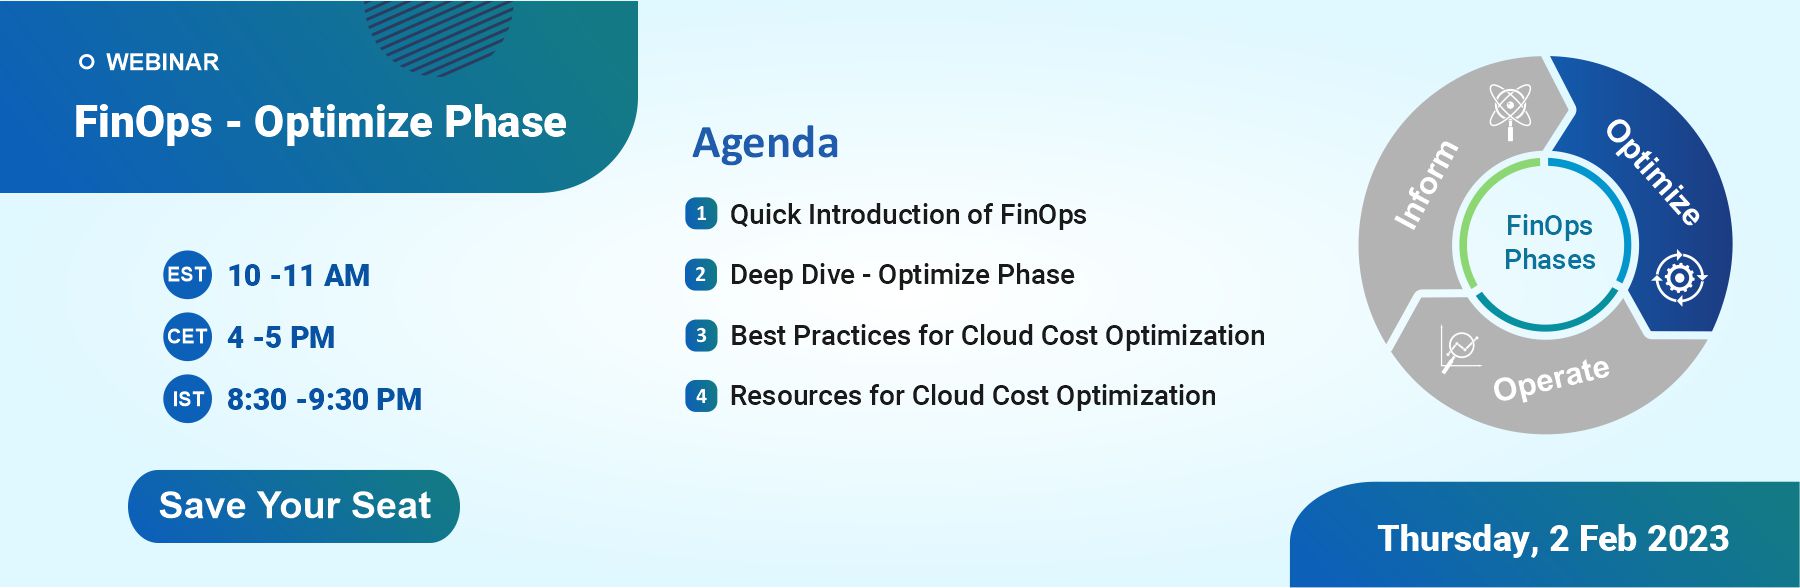 Webinar on FinOps Optimize Phase